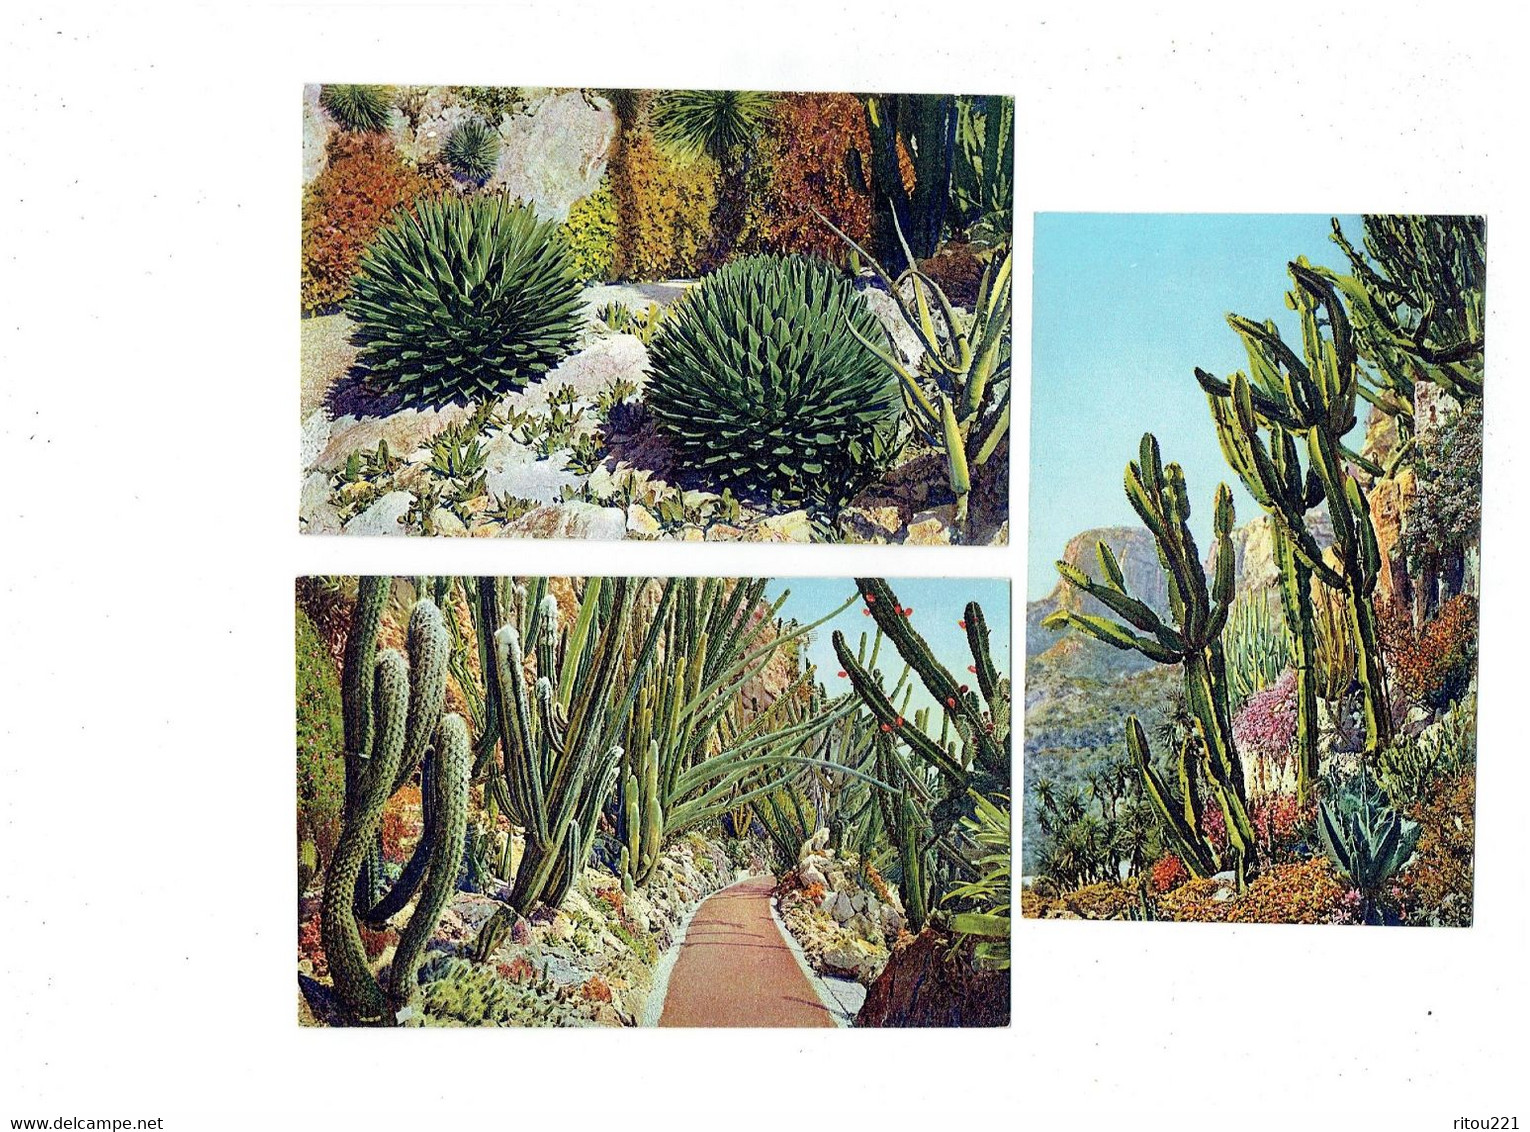 Lot 3 Cpa - MONACO - Jardin Exotique - ROCHER - Cactus AGAVE ALOES - Cactusses